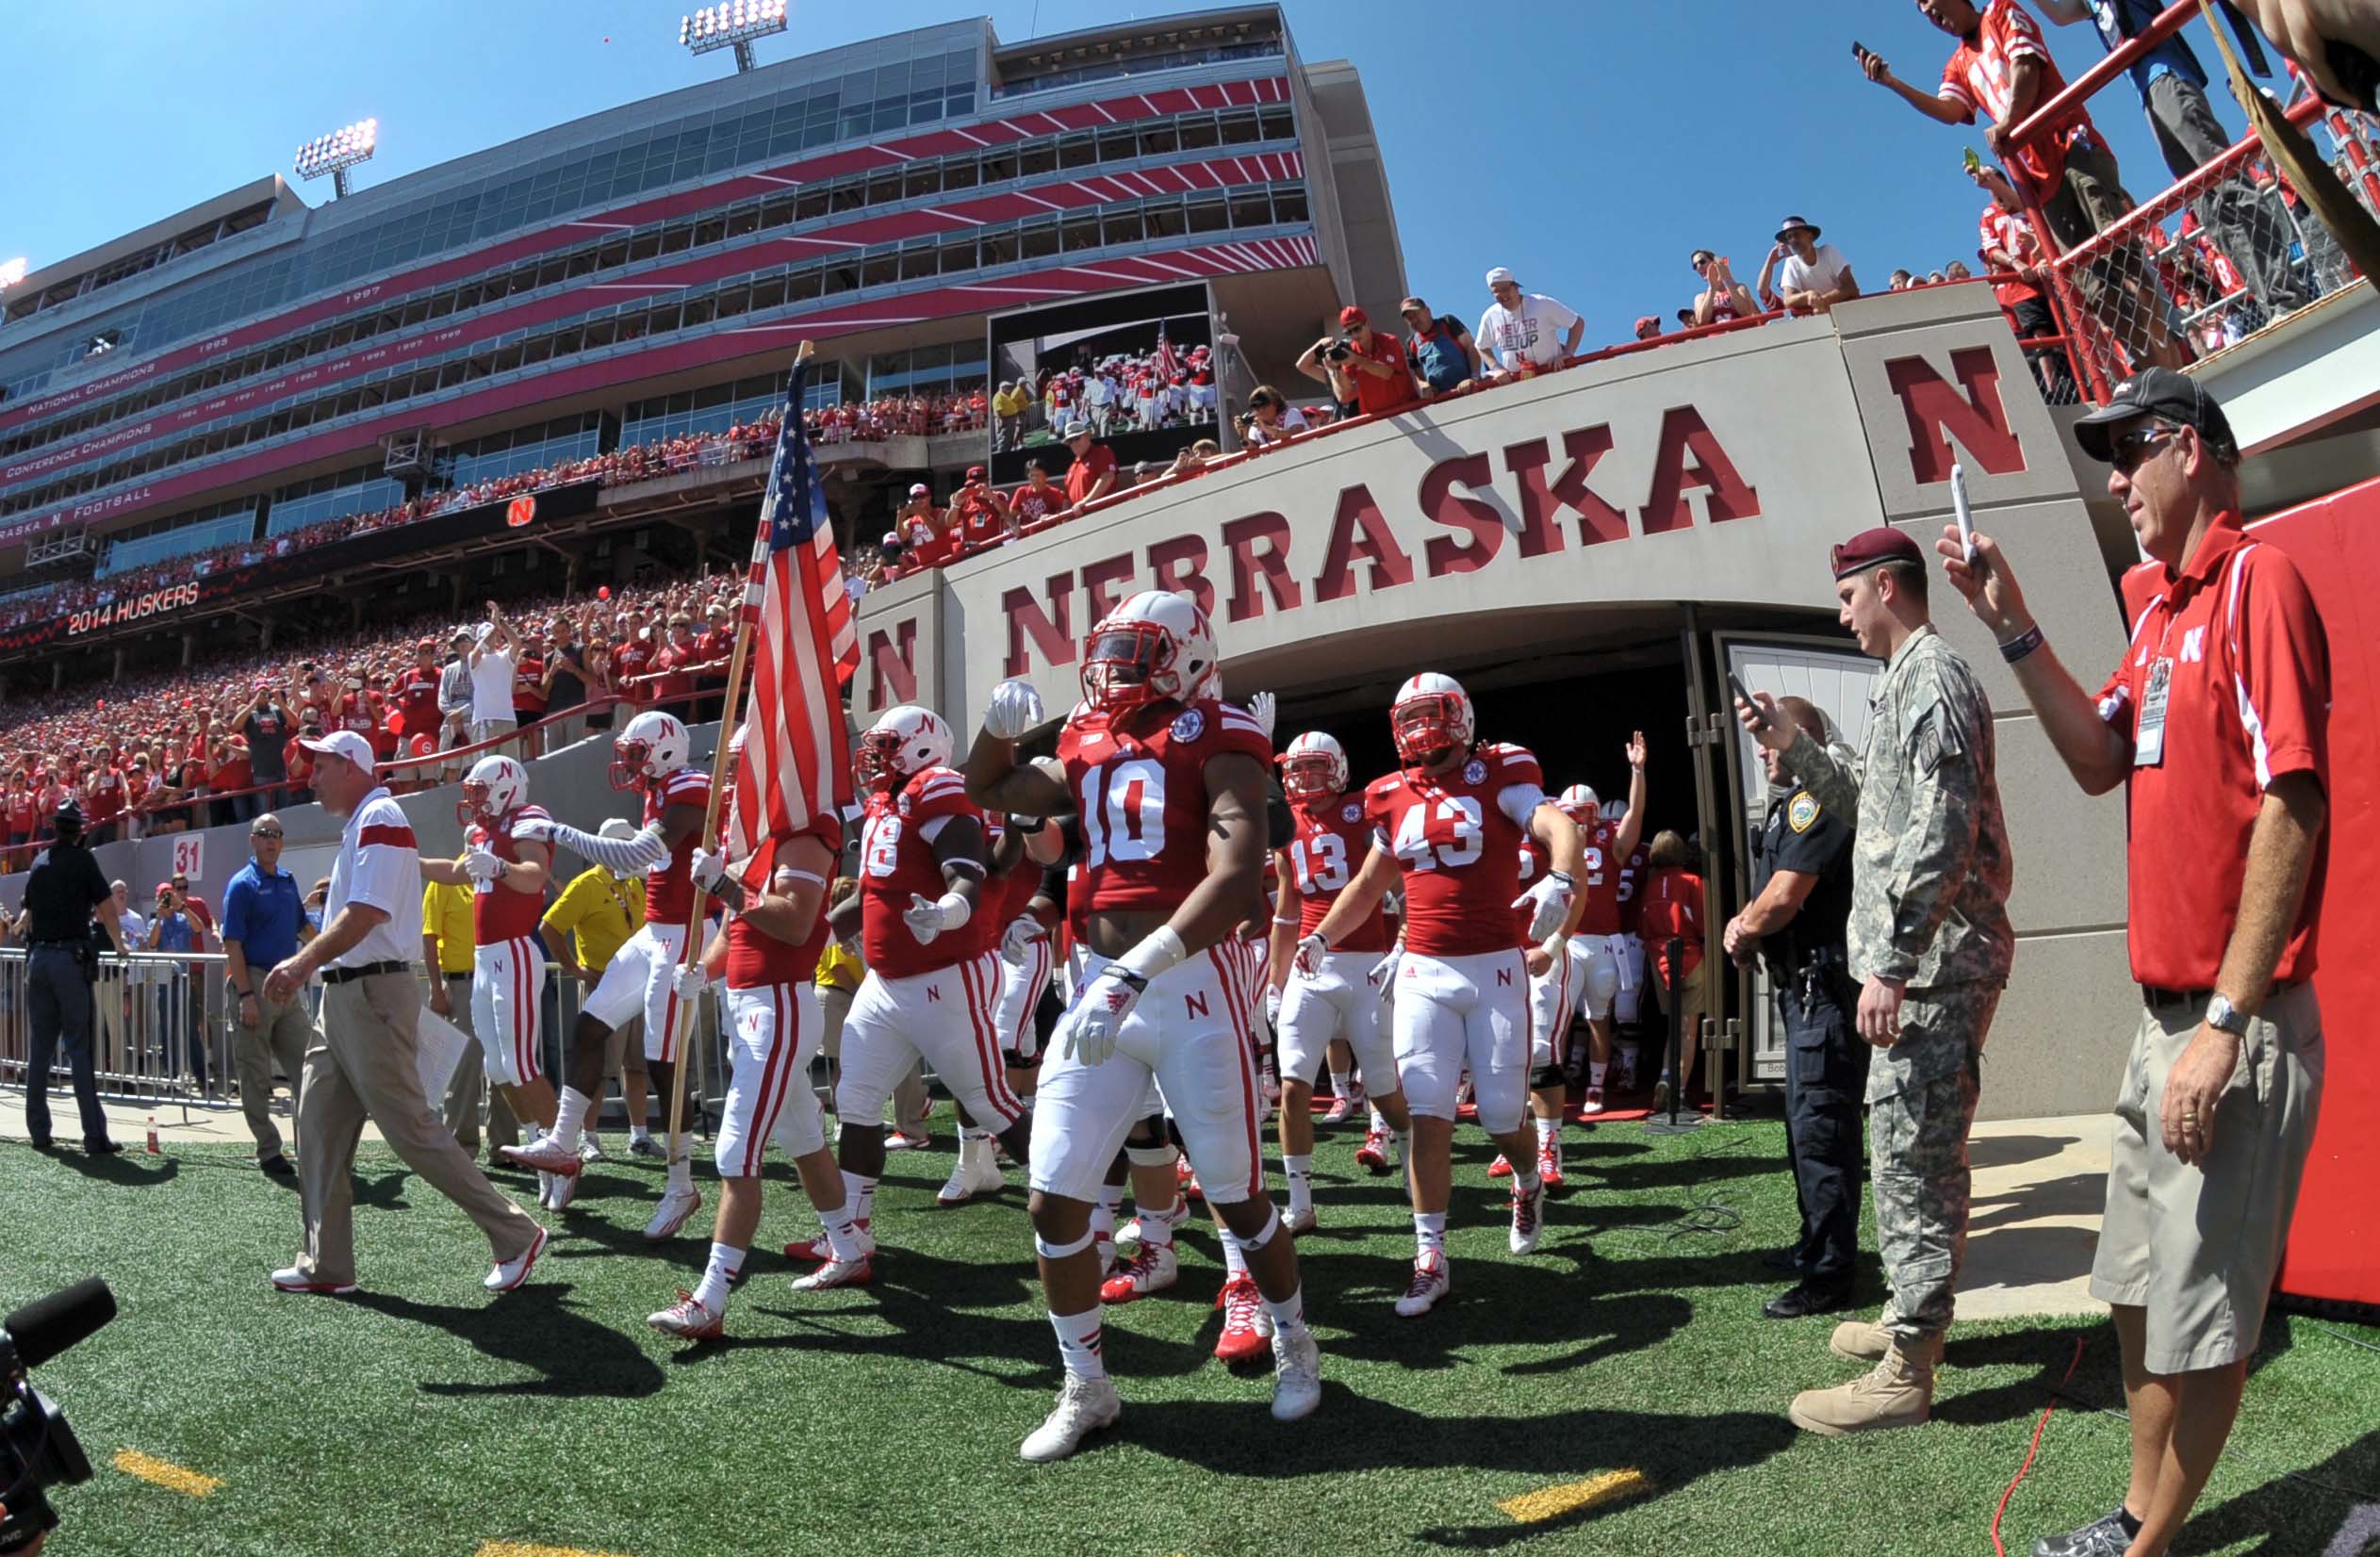 Nebraska's Tunnel Walk ranked one of college football's best entrances